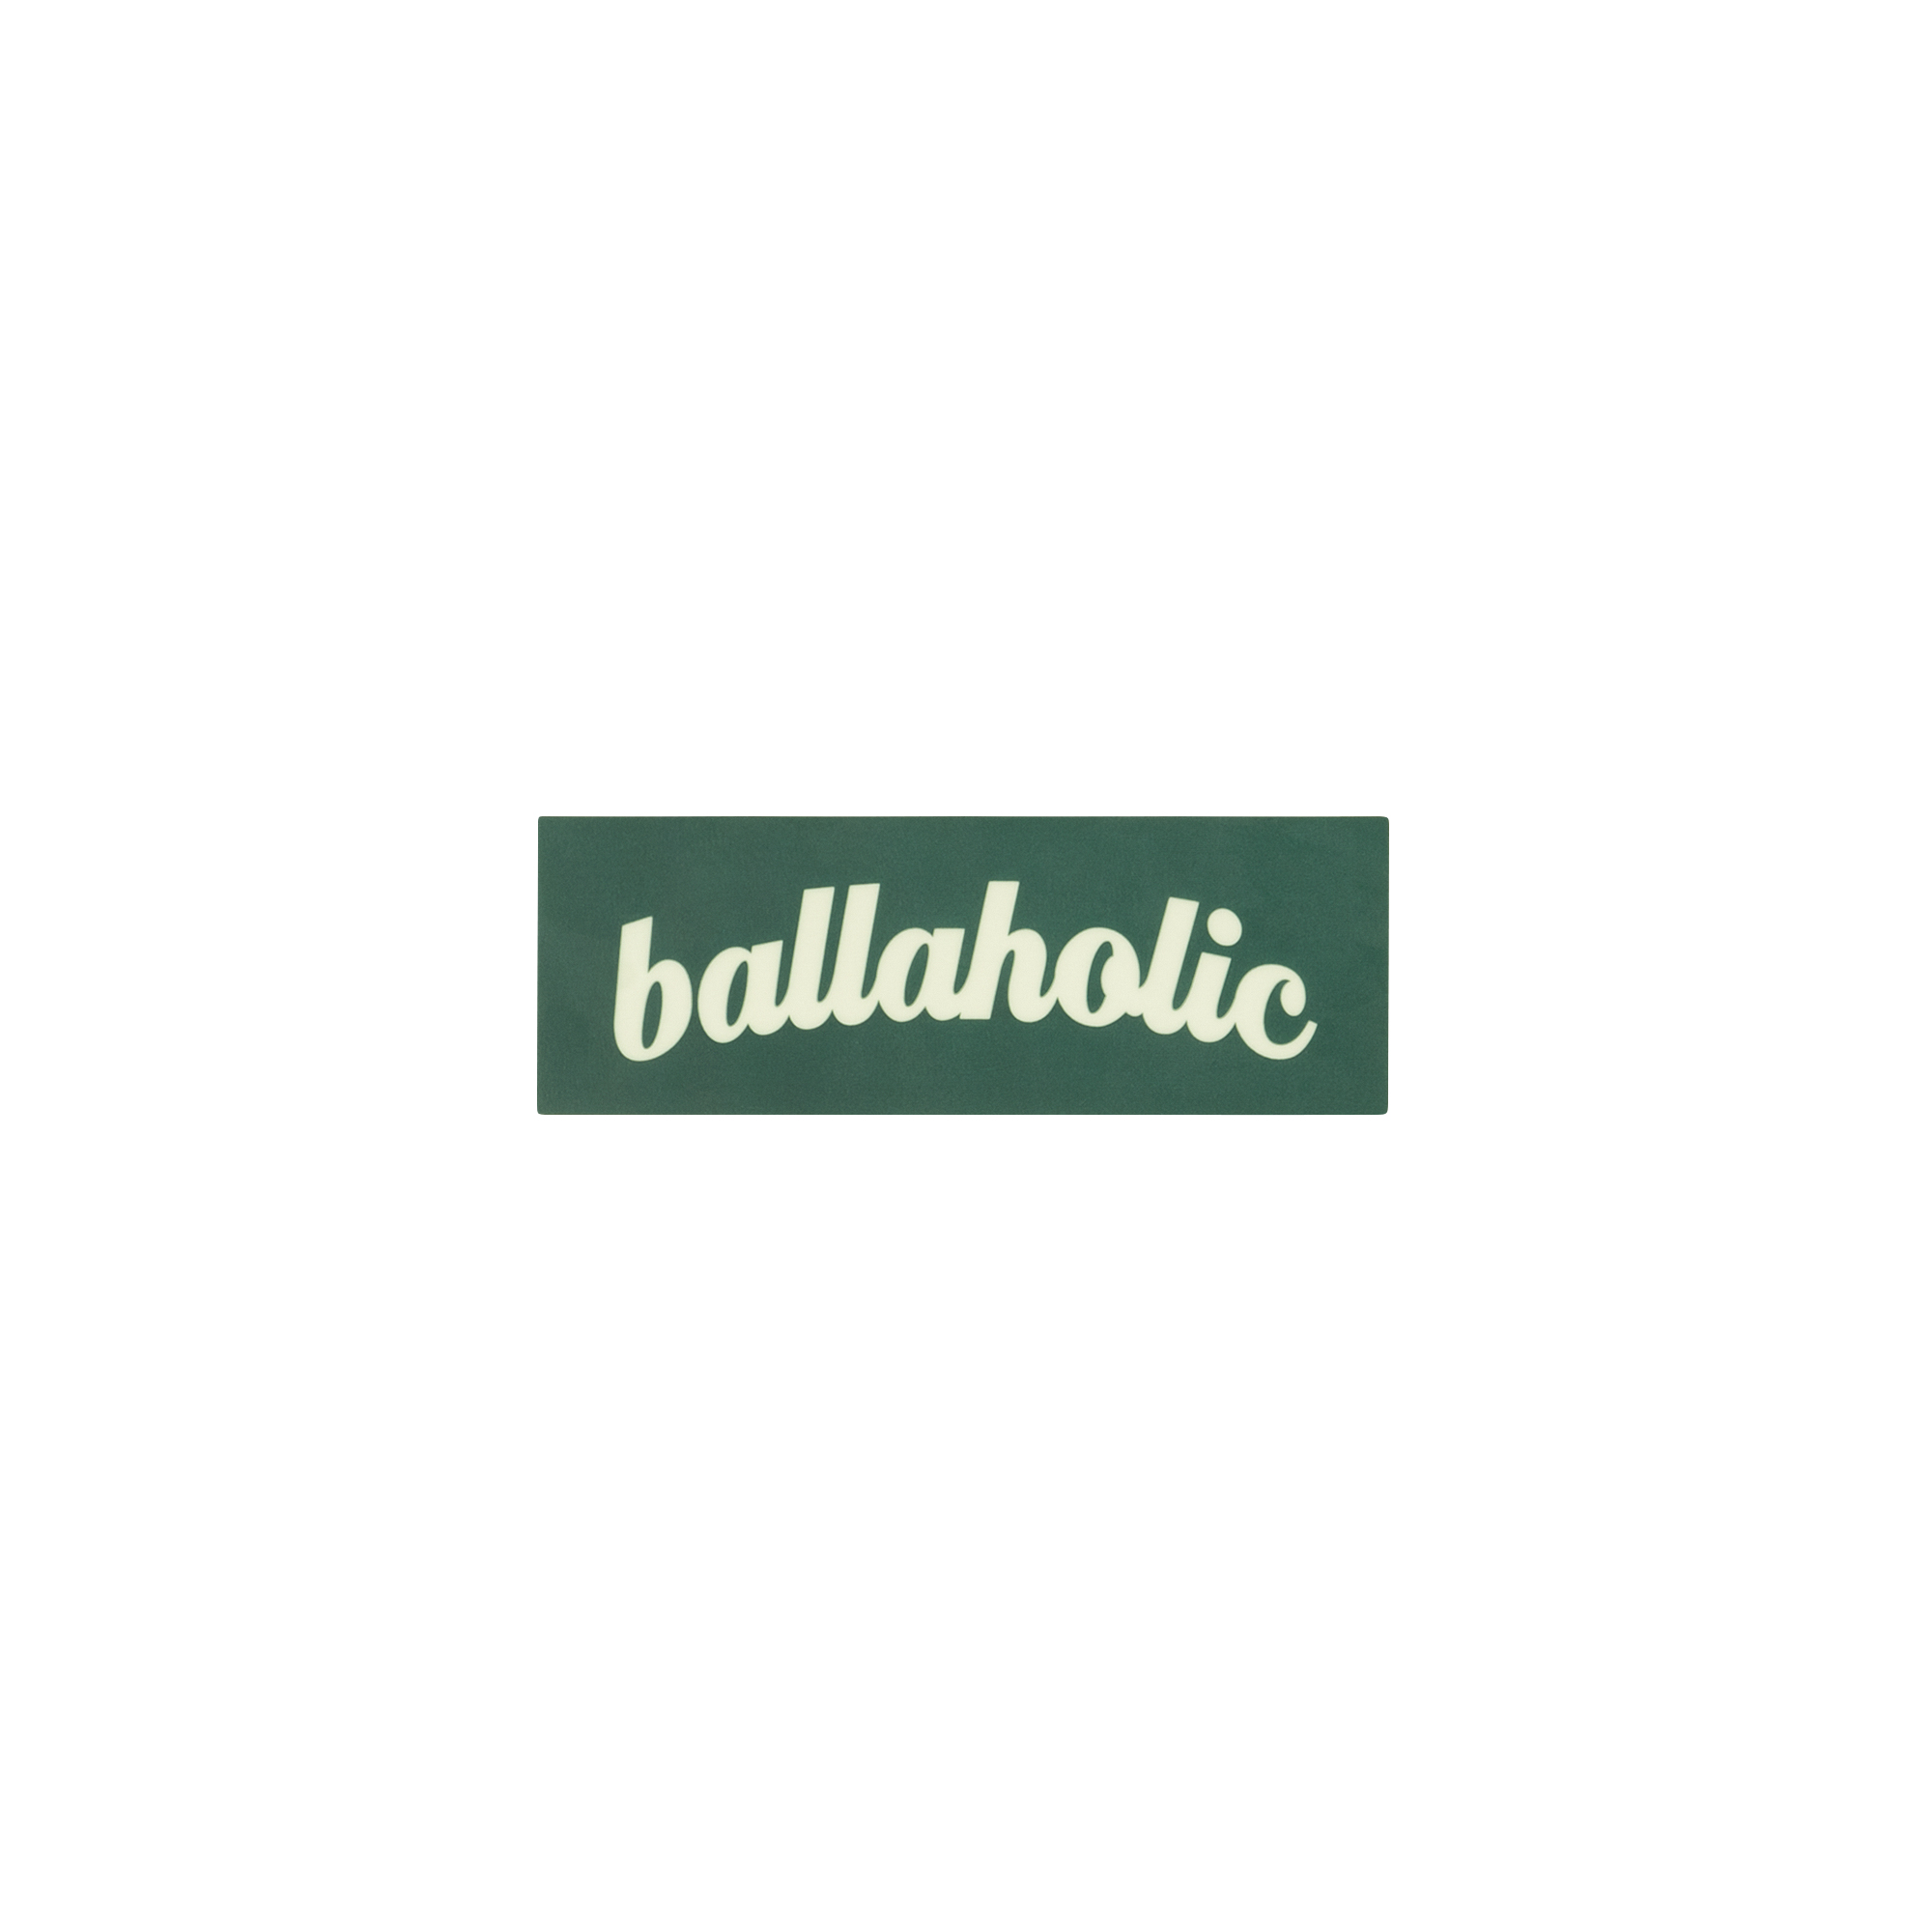 ballaholic ステッカー - バスケットボール